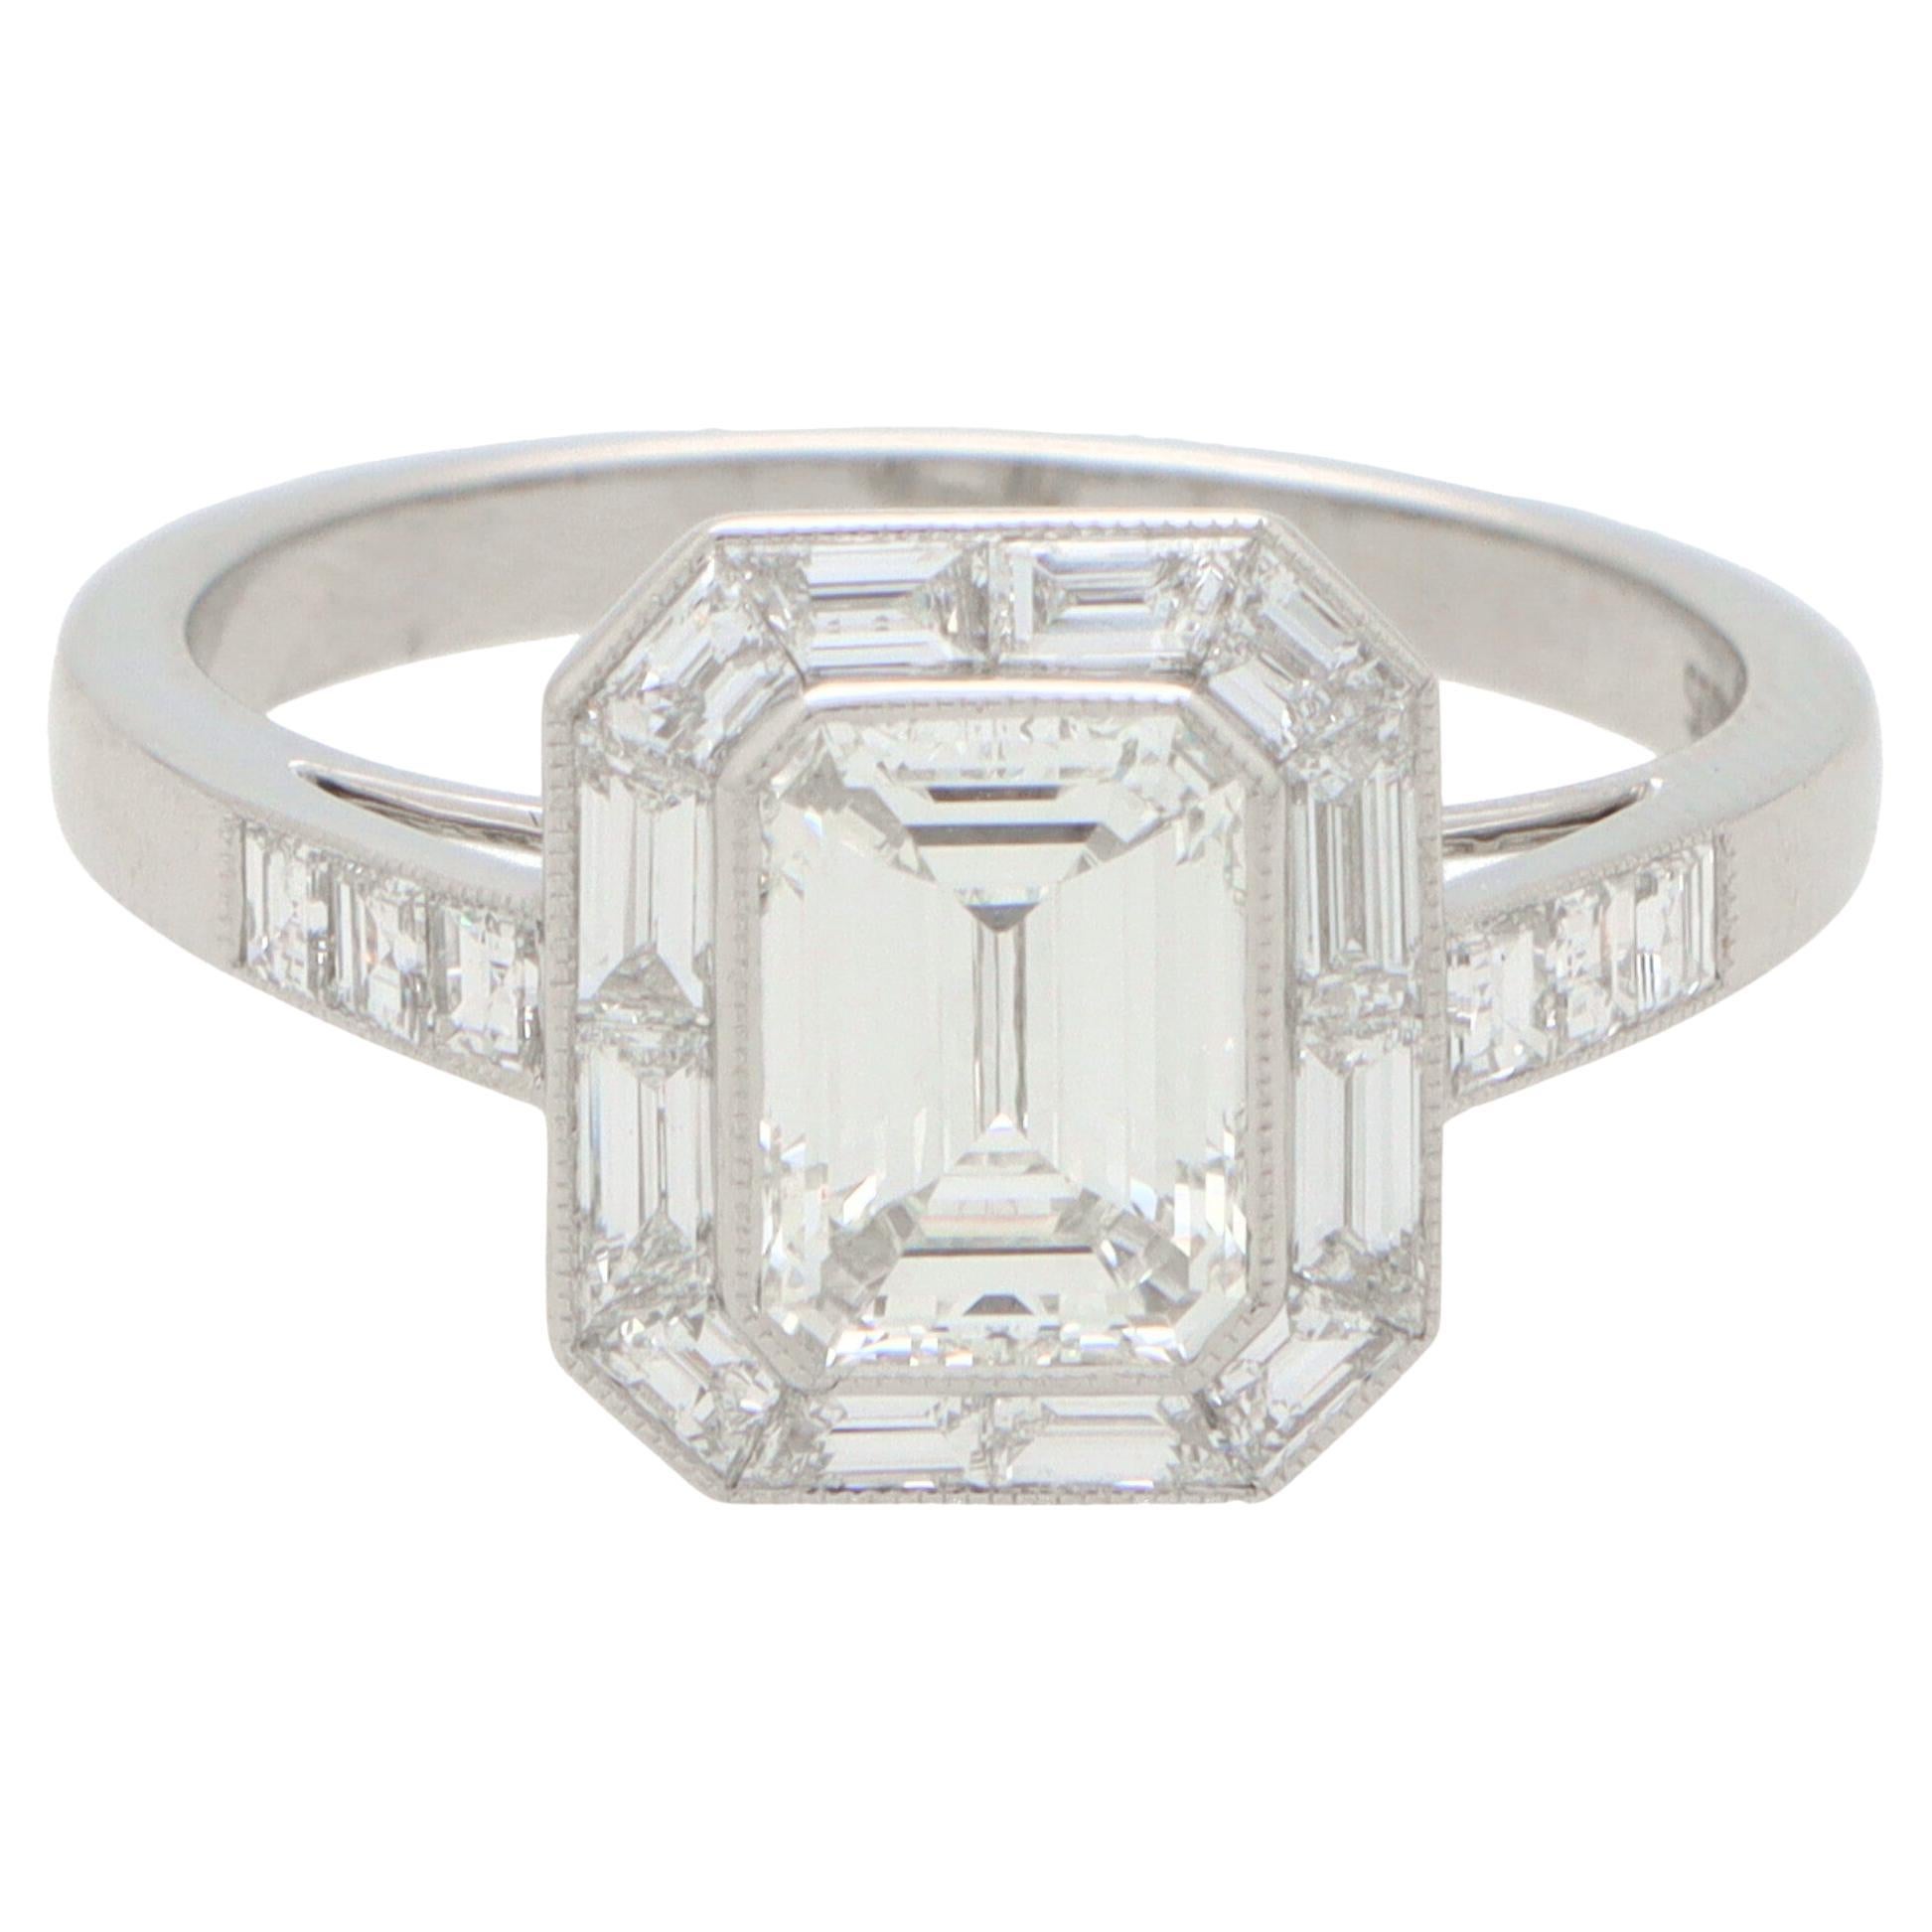 GIA Certified Art Deco Inspired Emerald Cut Diamond Halo Ring Set in Platinum